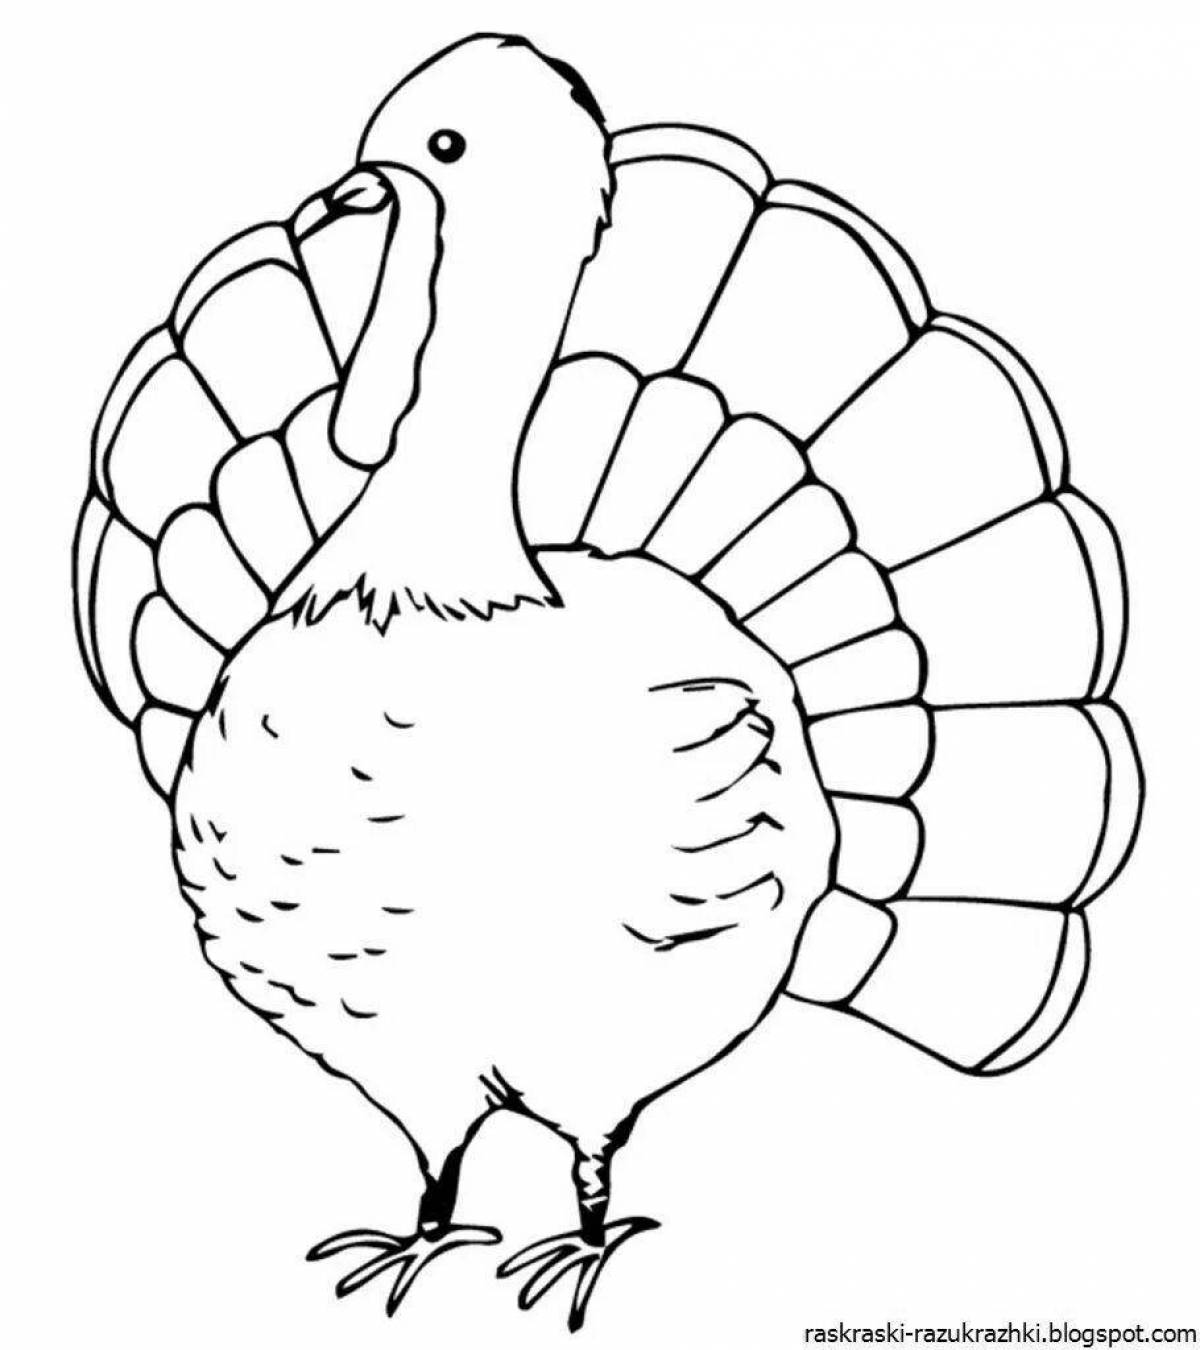 Humorous coloring book turkey